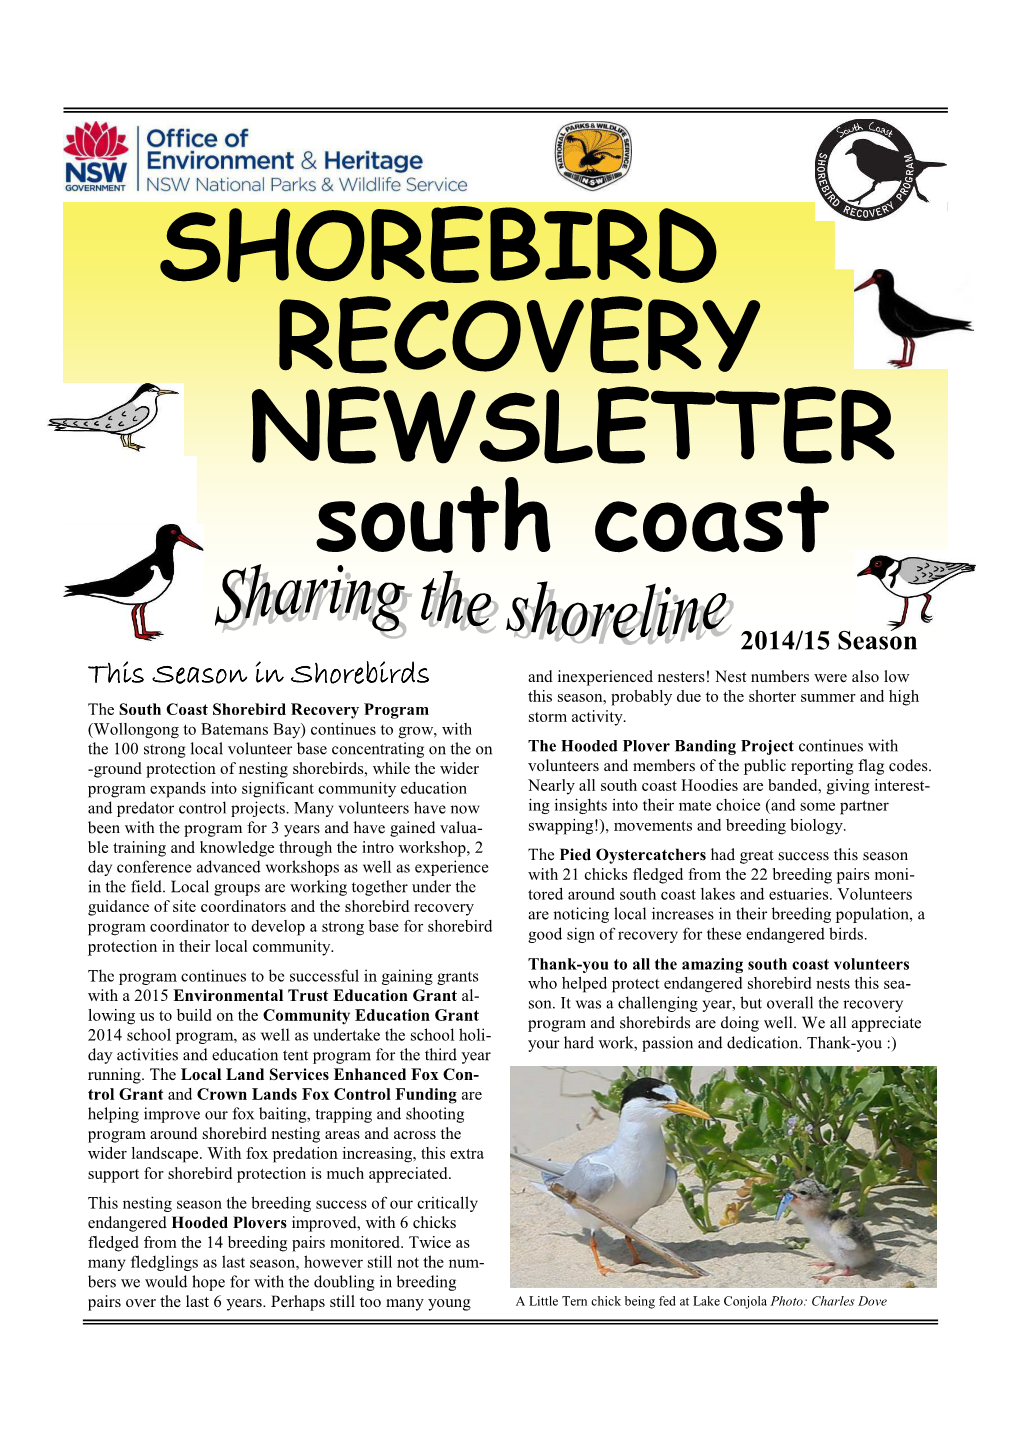 South Coast Shorebird Recovery Program 2014/15 Newsletter